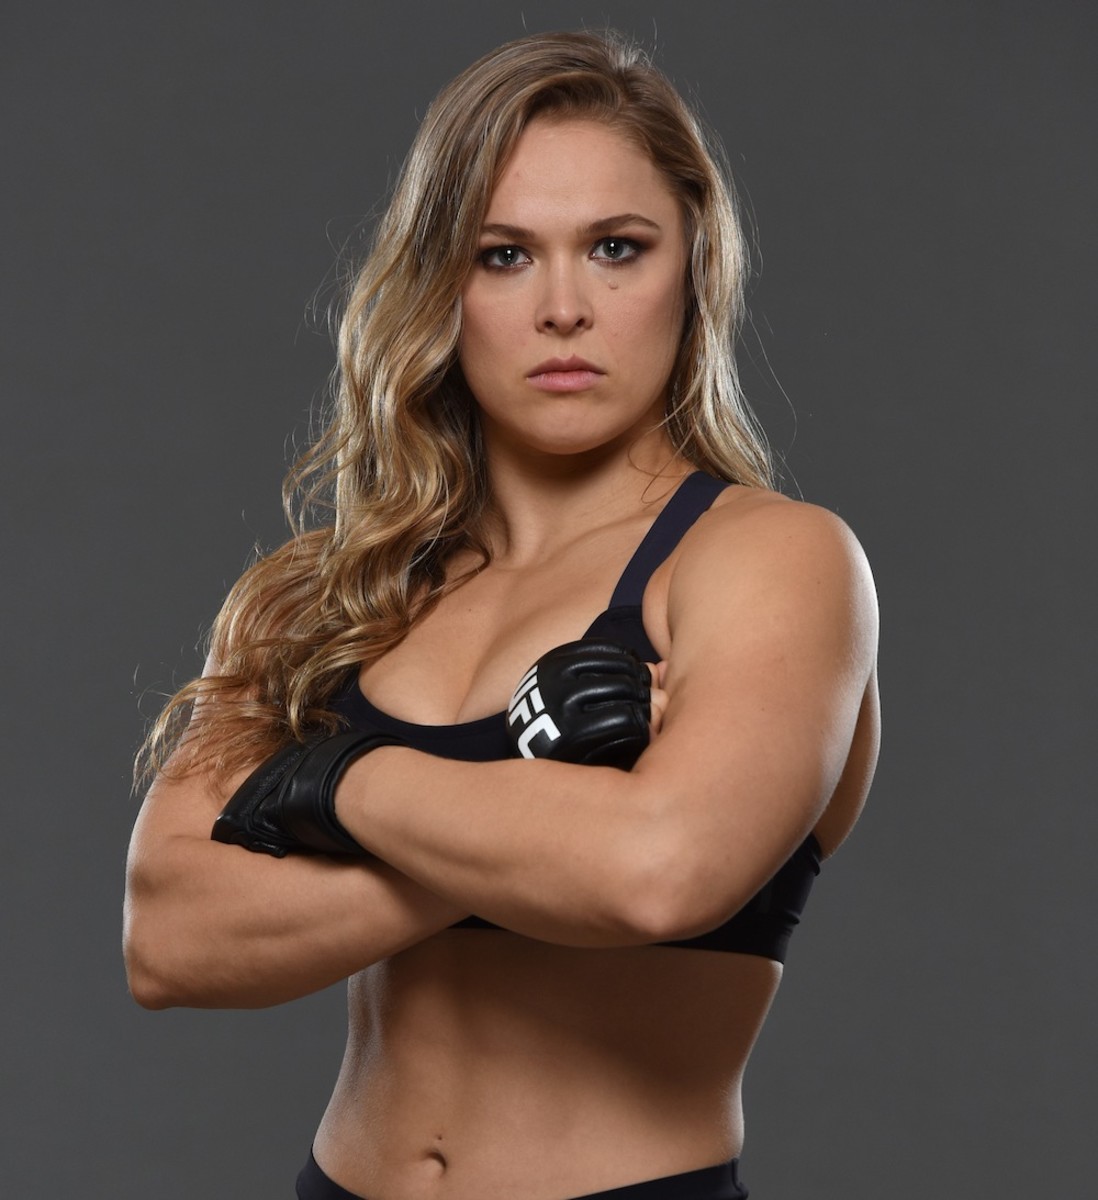 Ronda Rousey - Female MMA